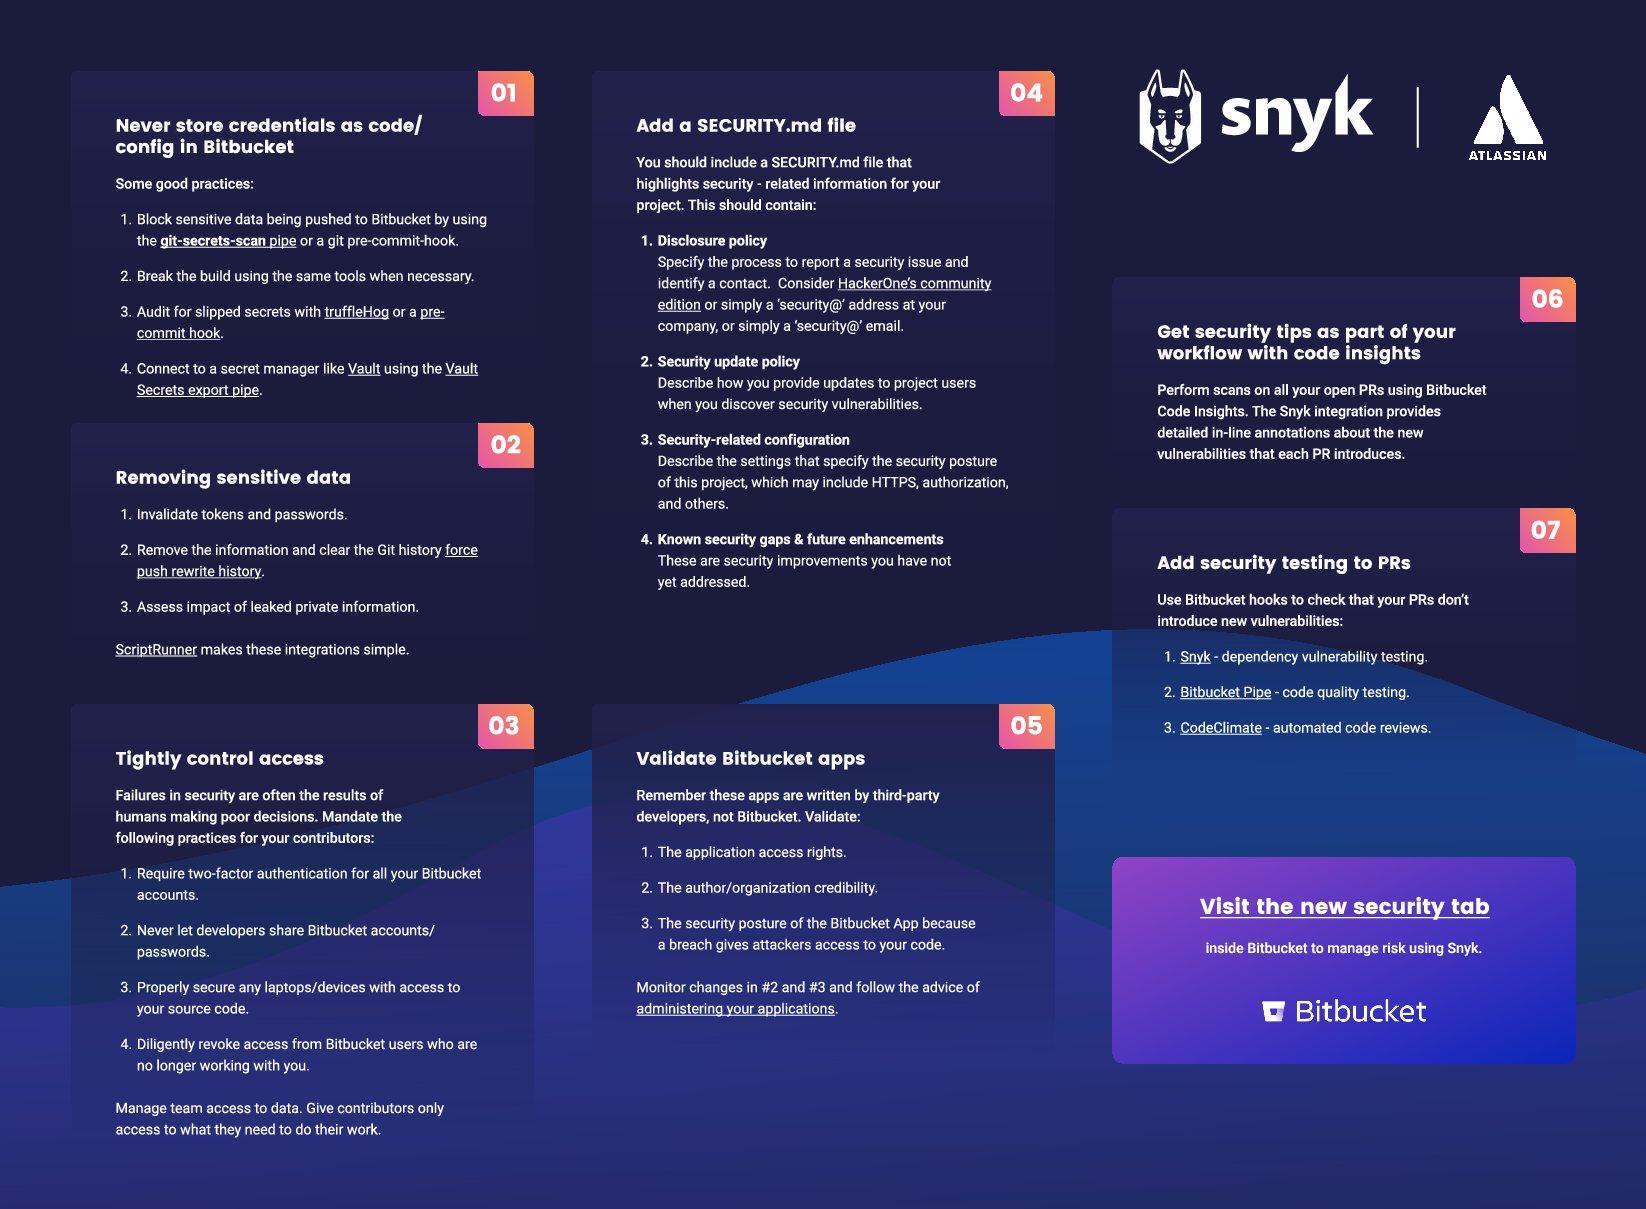 wordpress-sync/cheat-sheet-best-practices-snyk-bitbucket-pdf